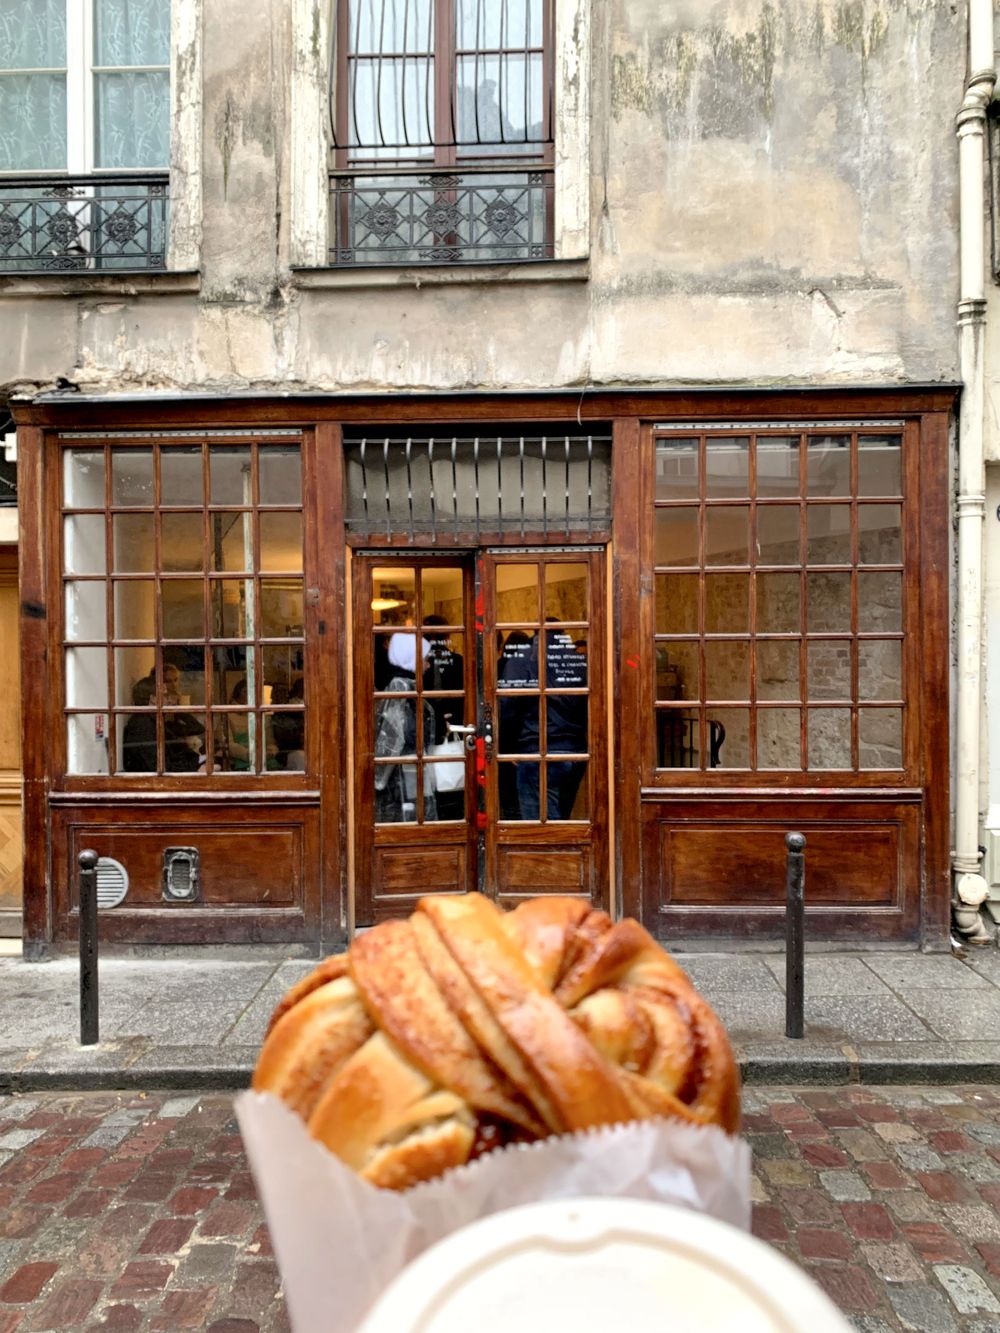 Circus Bakery Cinnamon Rolls, Paris